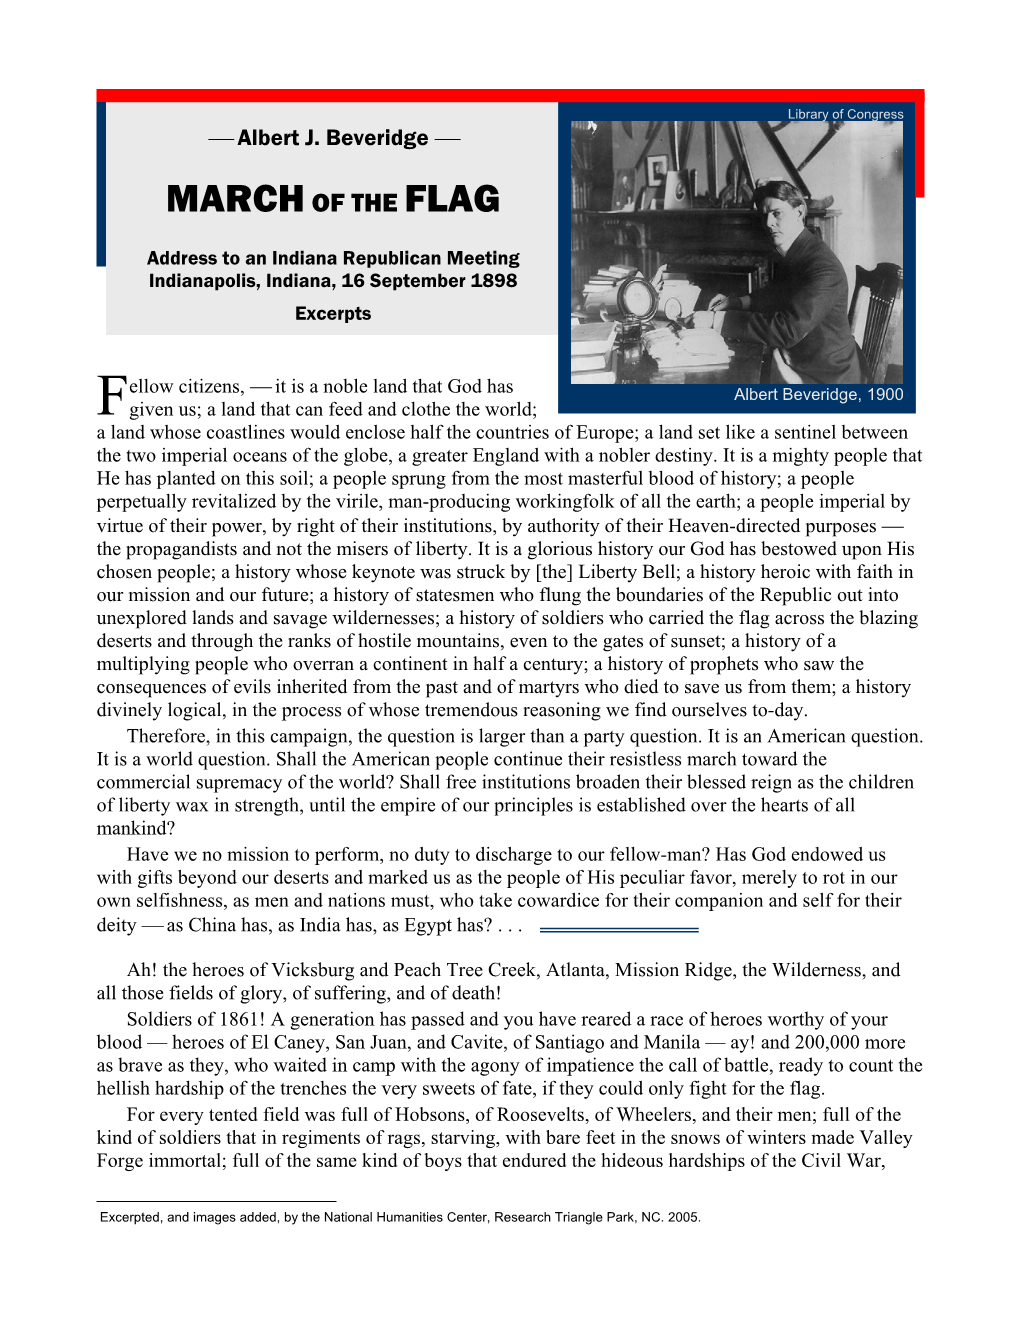 Albert Beveridge, "March of the Flag,"